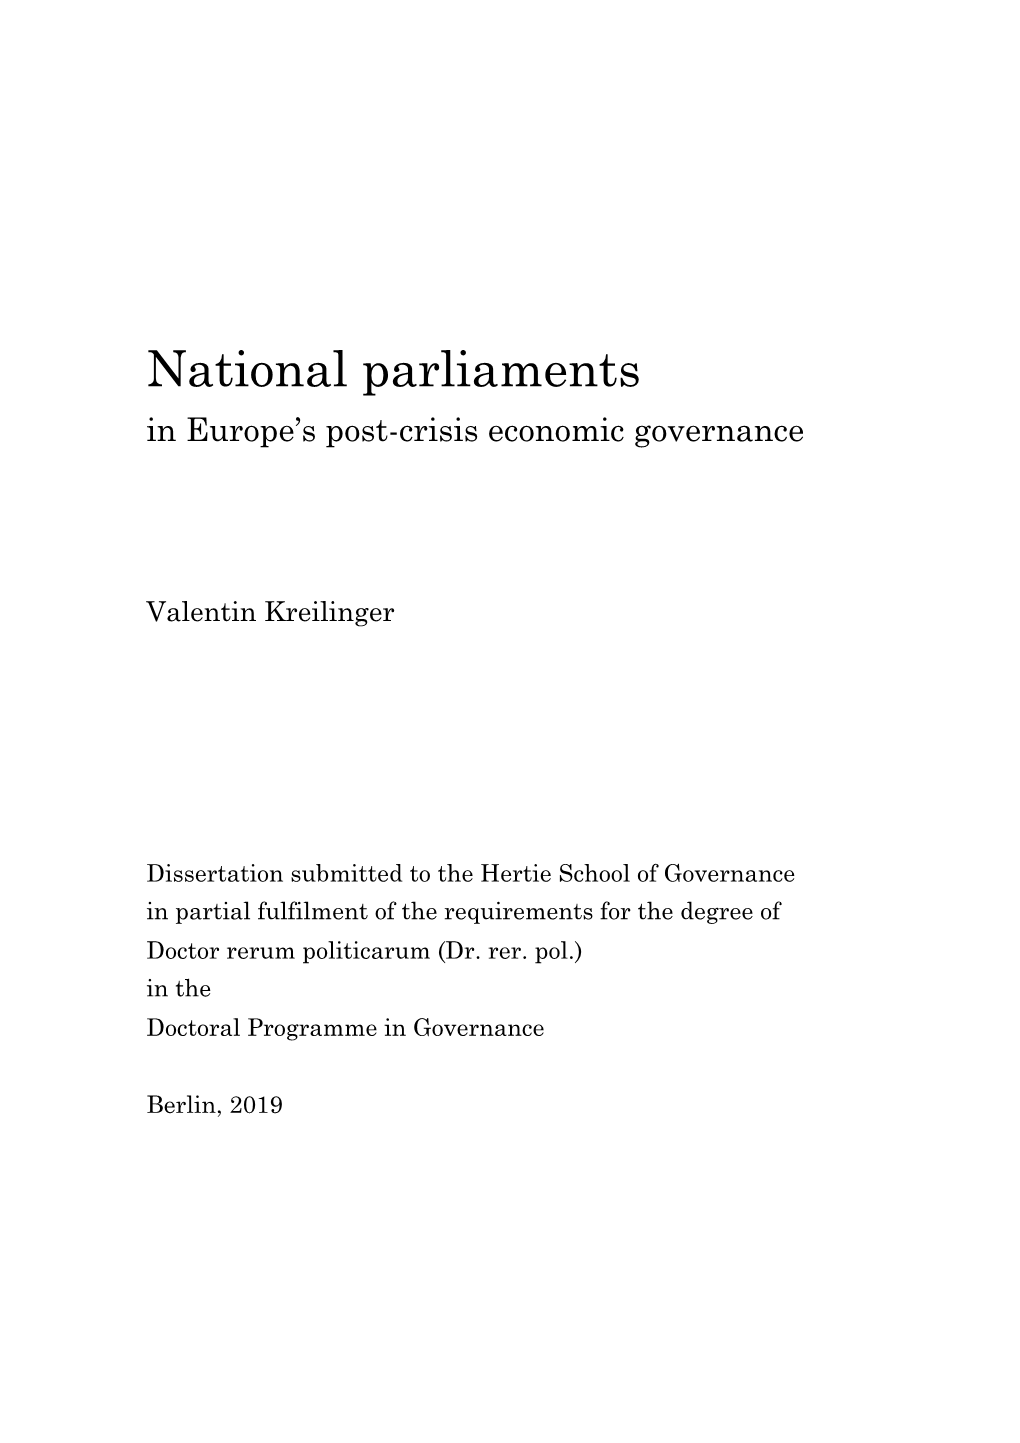 Kreilinger National Parliaments Dissertation 2019